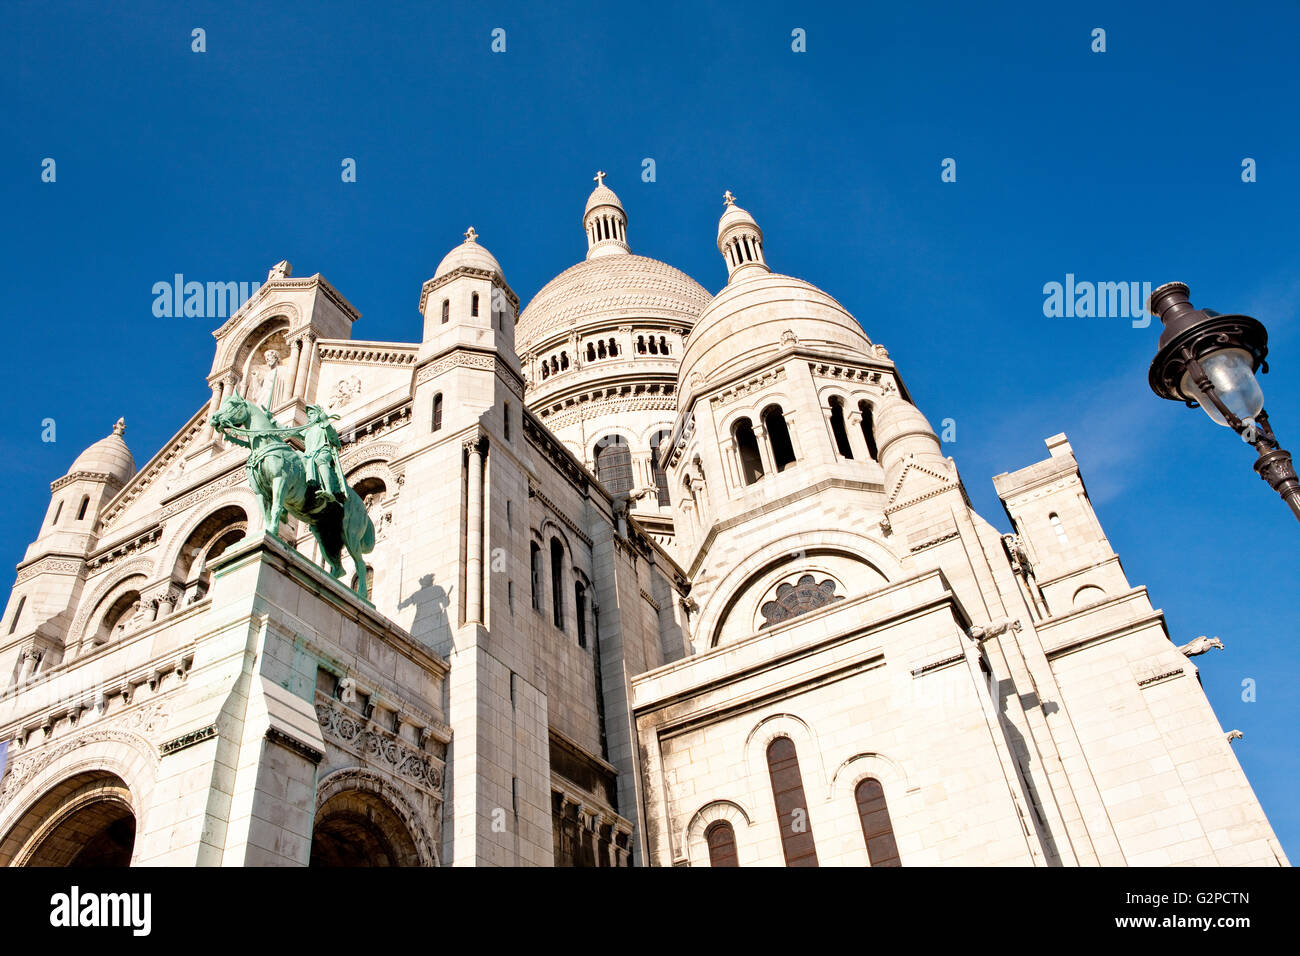 Basilica of the Sacred Heart of Paris, commonly known as Sacré-Cœur Basilica and often simply Sacré-Cœur, France Stock Photo